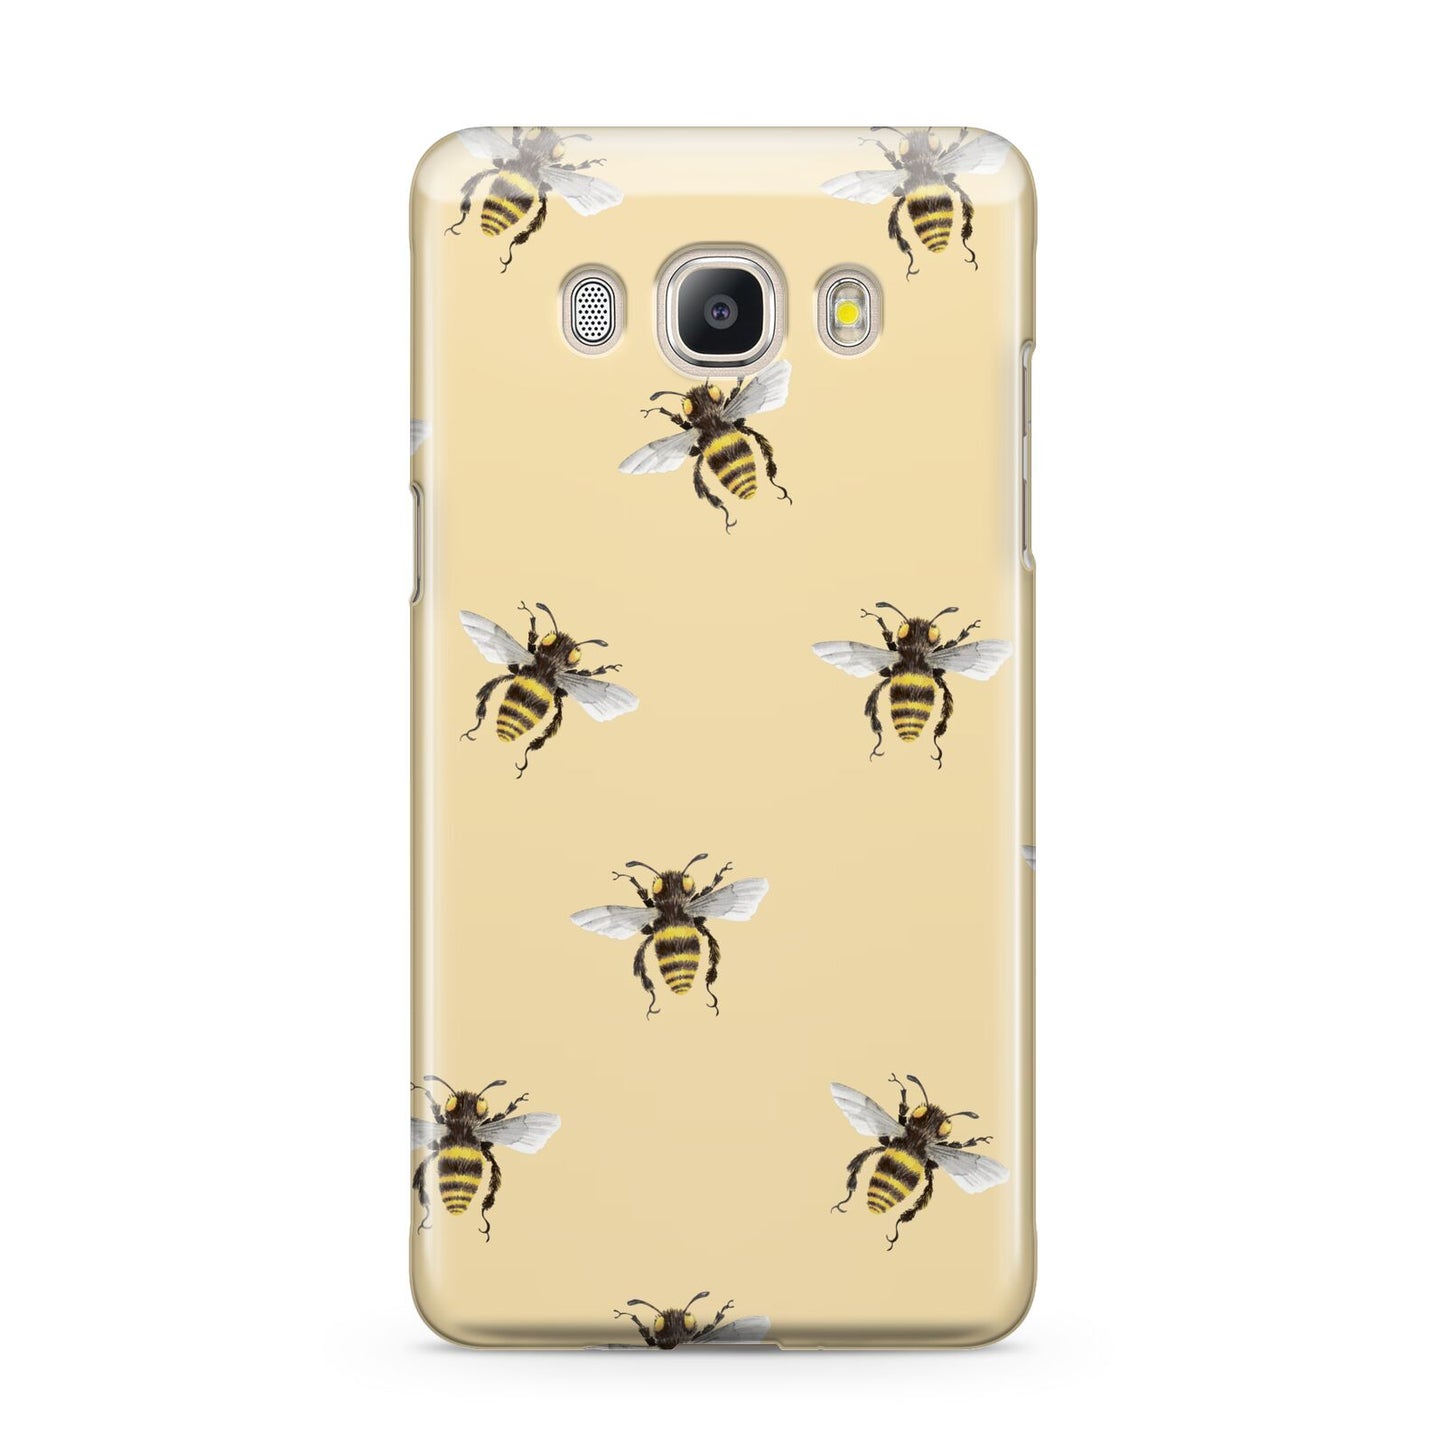 Bee Illustrations Samsung Galaxy J5 2016 Case